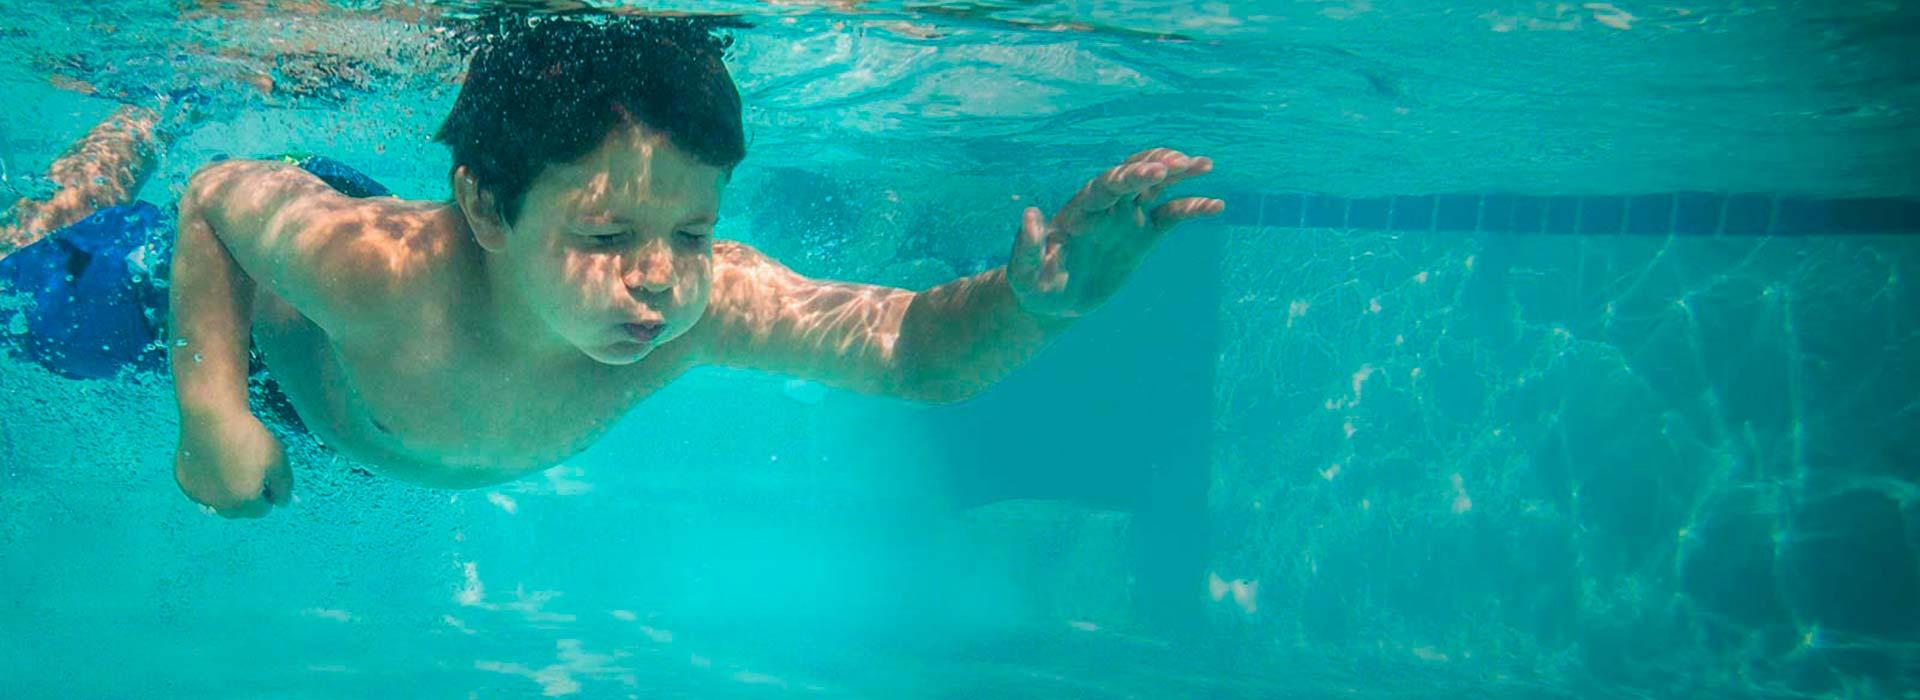 kid swimming